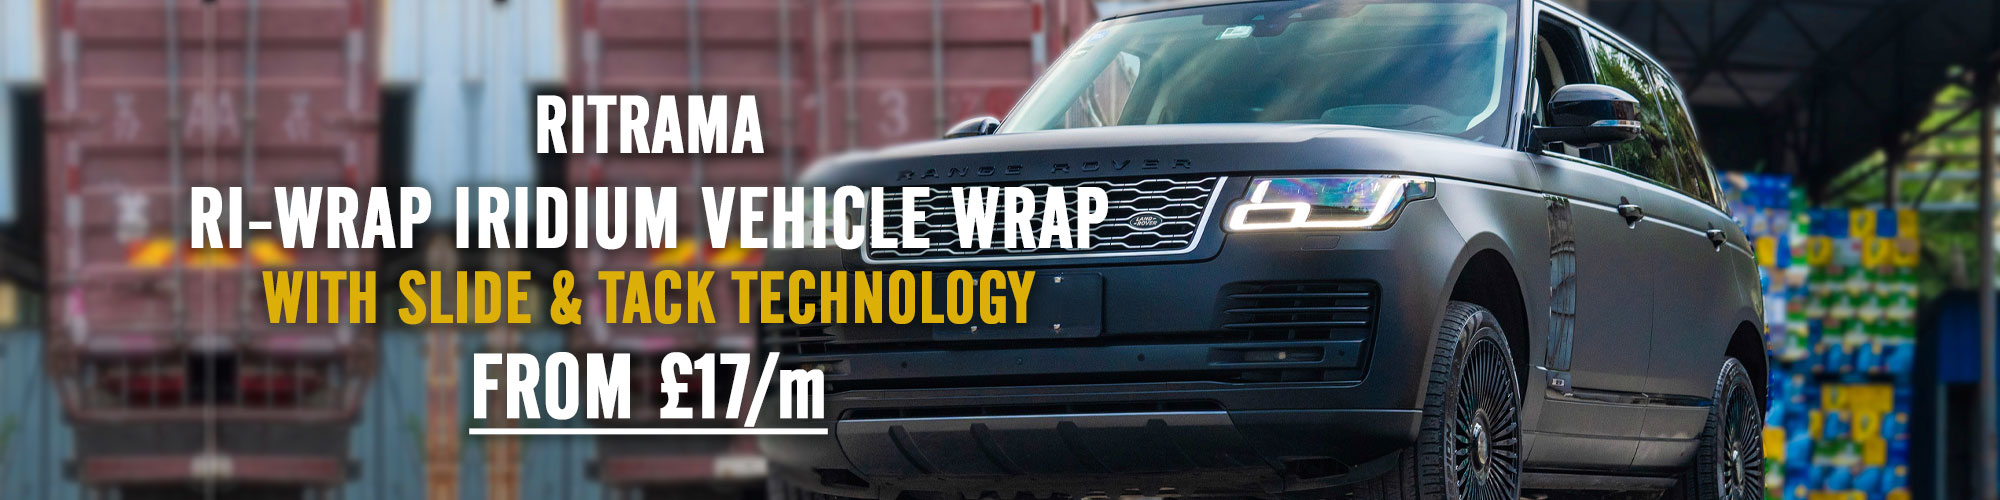 Victory Design - Ritrama Ri-Wrap Iridium Vehicle Wrapping Film